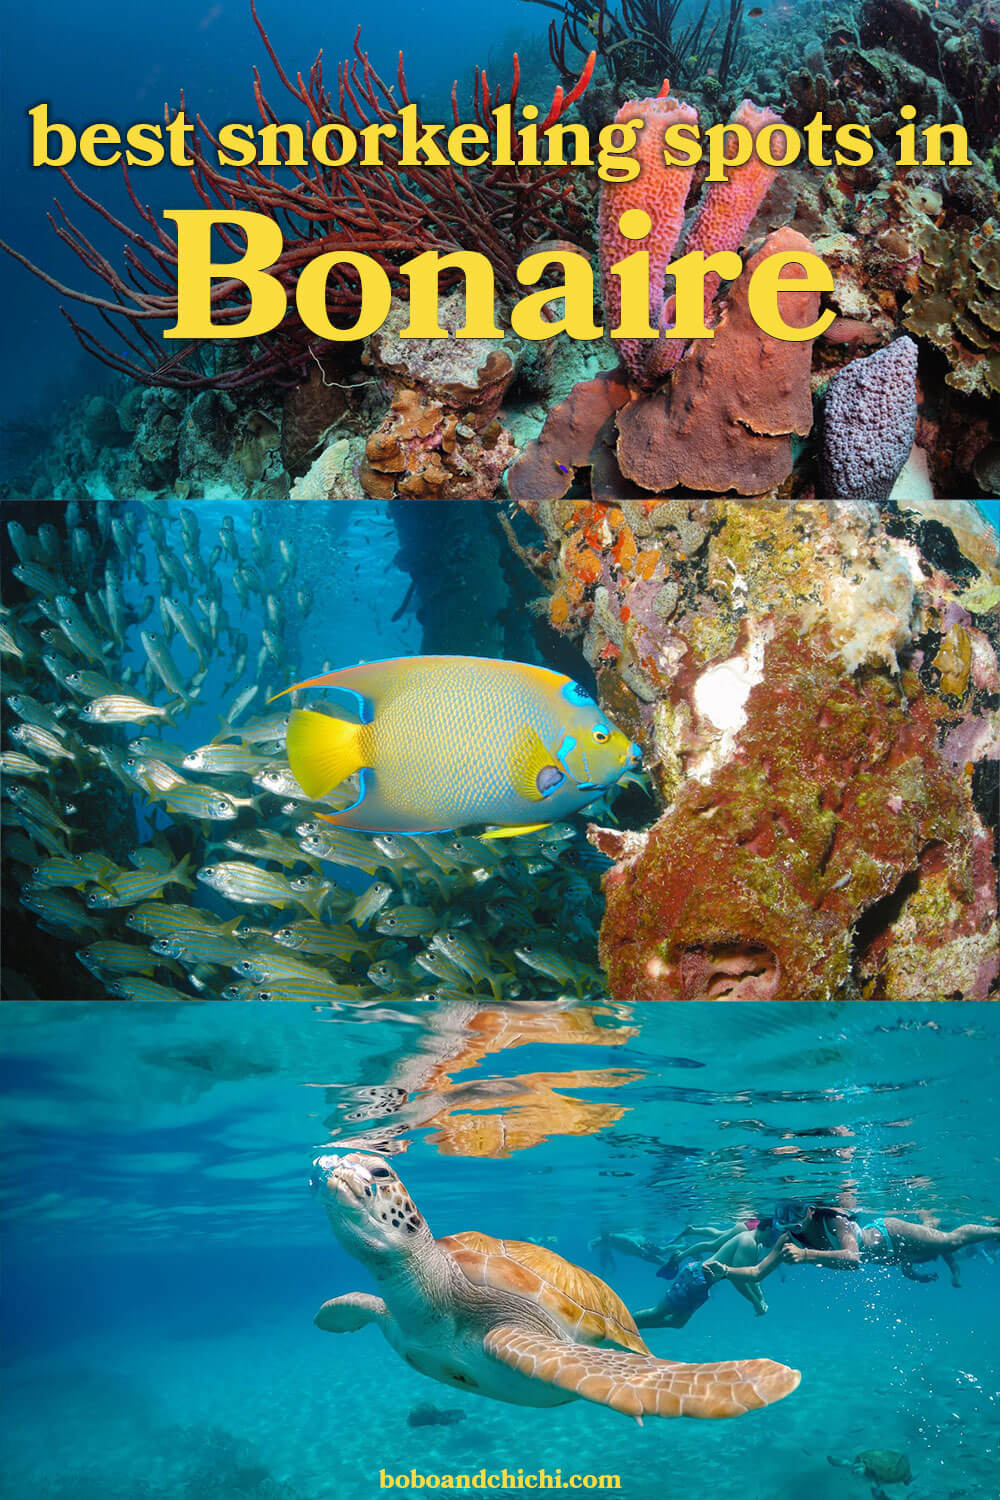 bonaire-snorkeling-guide